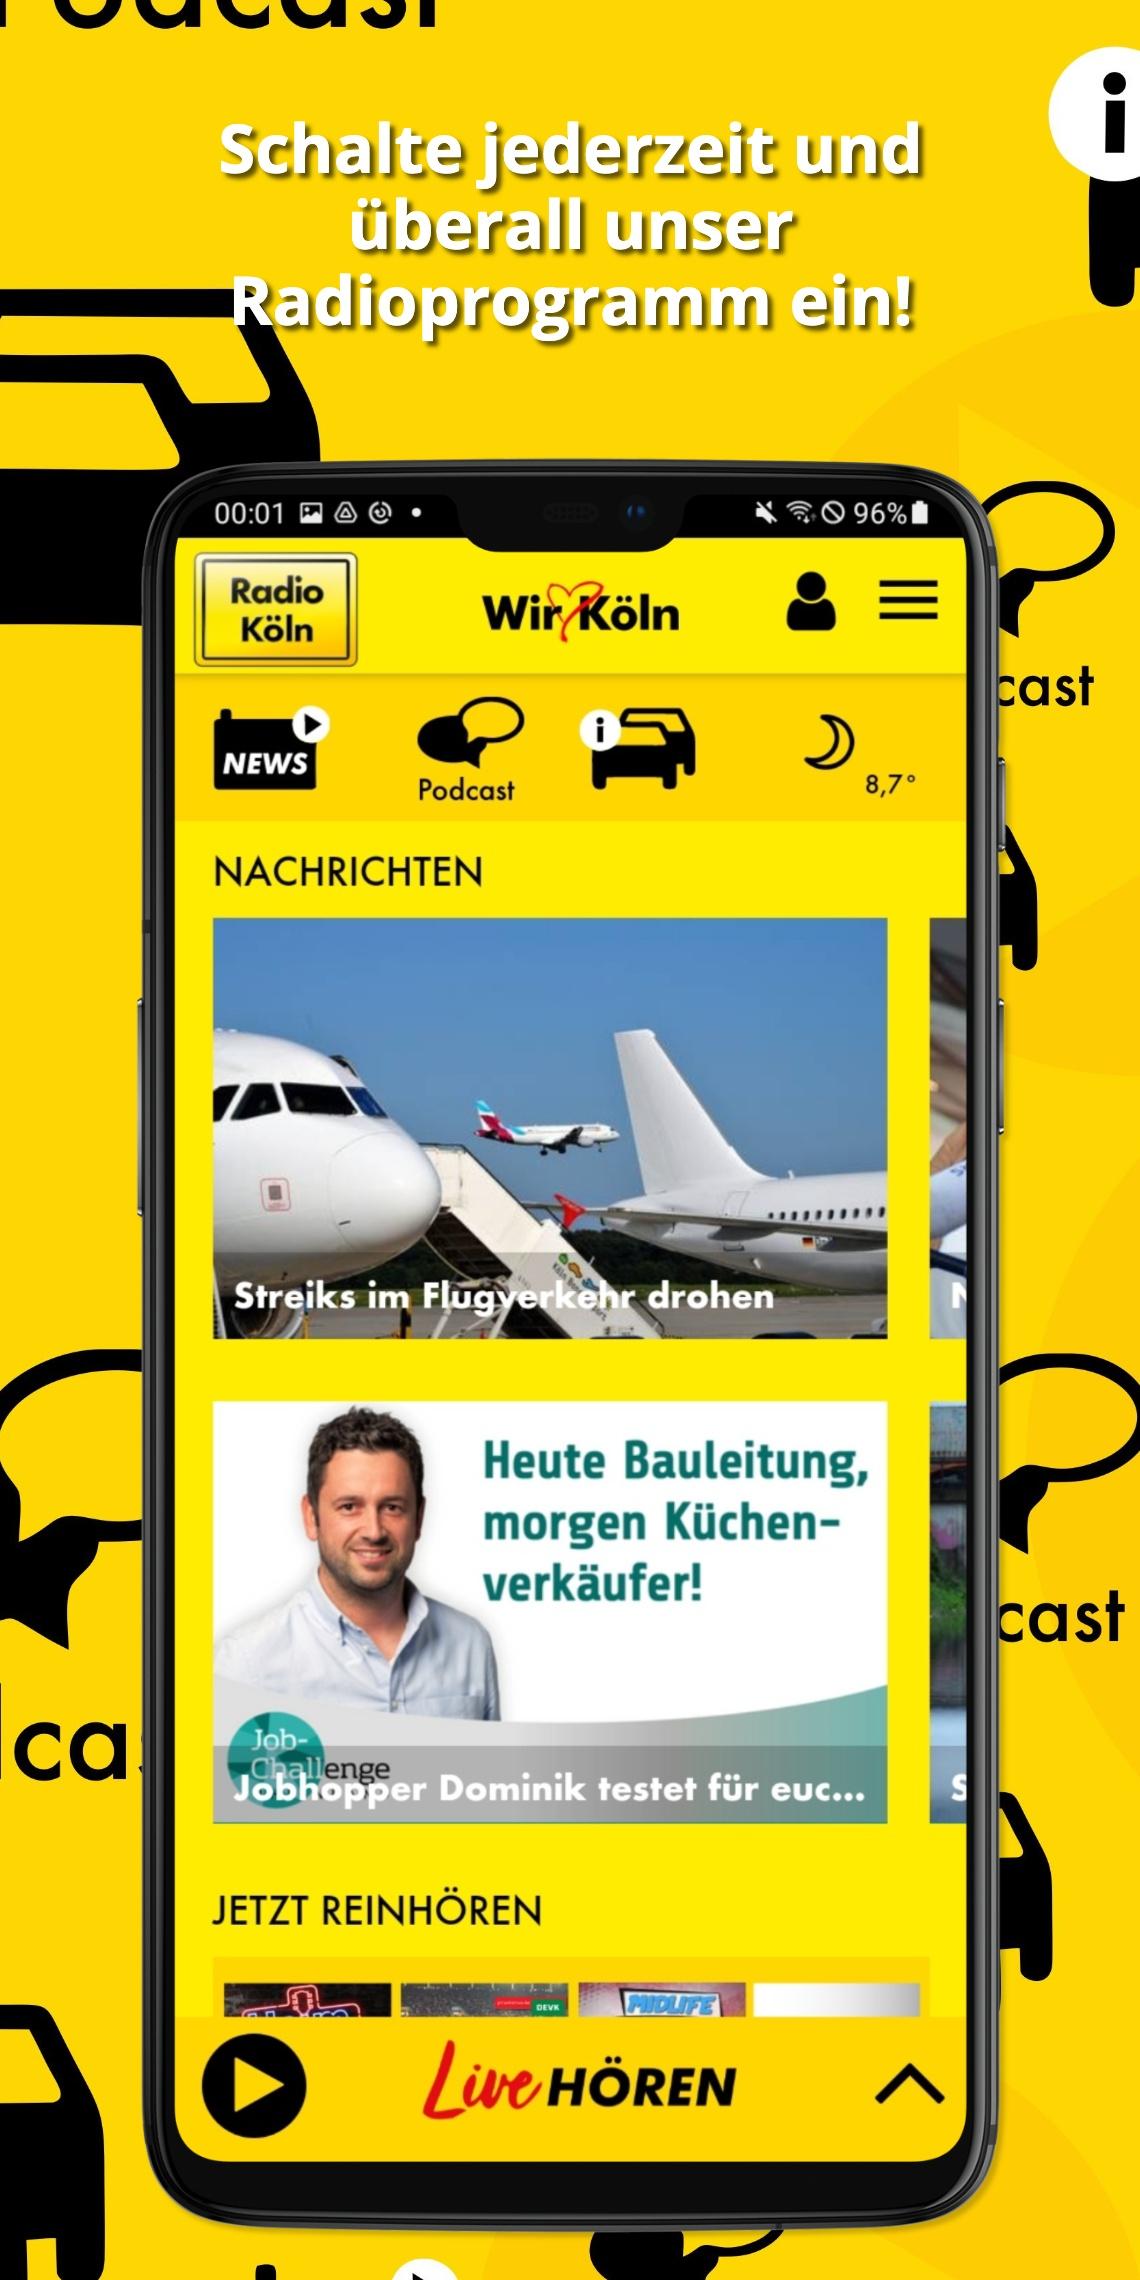 Radio Köln for Android - APK Download